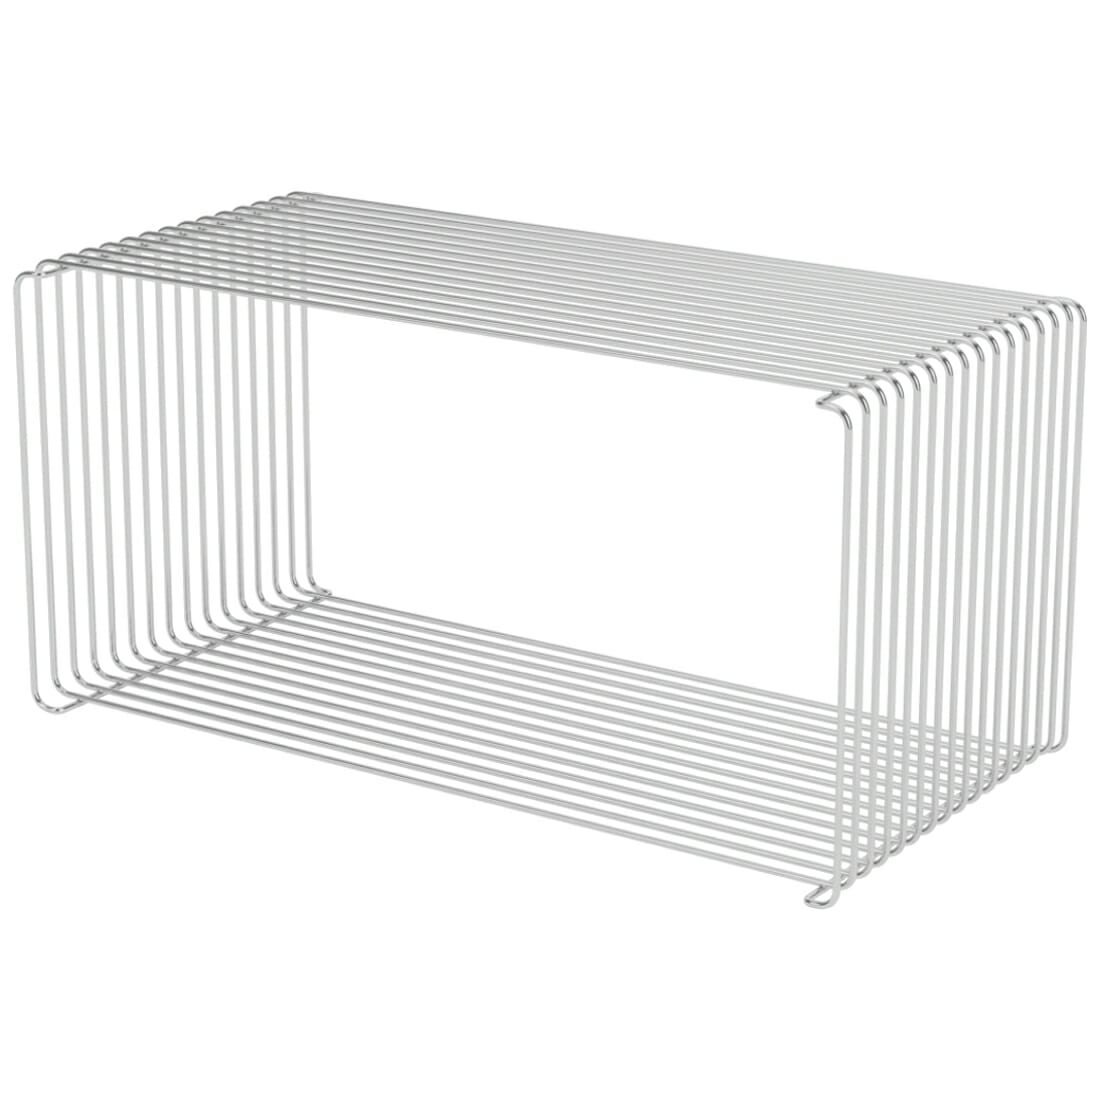 https://www.tagwerc.us/tw-lib/uploads/panton-wire-extended__wire-shelf_34_8_design-shelf_chrome_bookshelf_wall-shelf_metal-shelf_montana_verner-panton_tagwerc.jpg